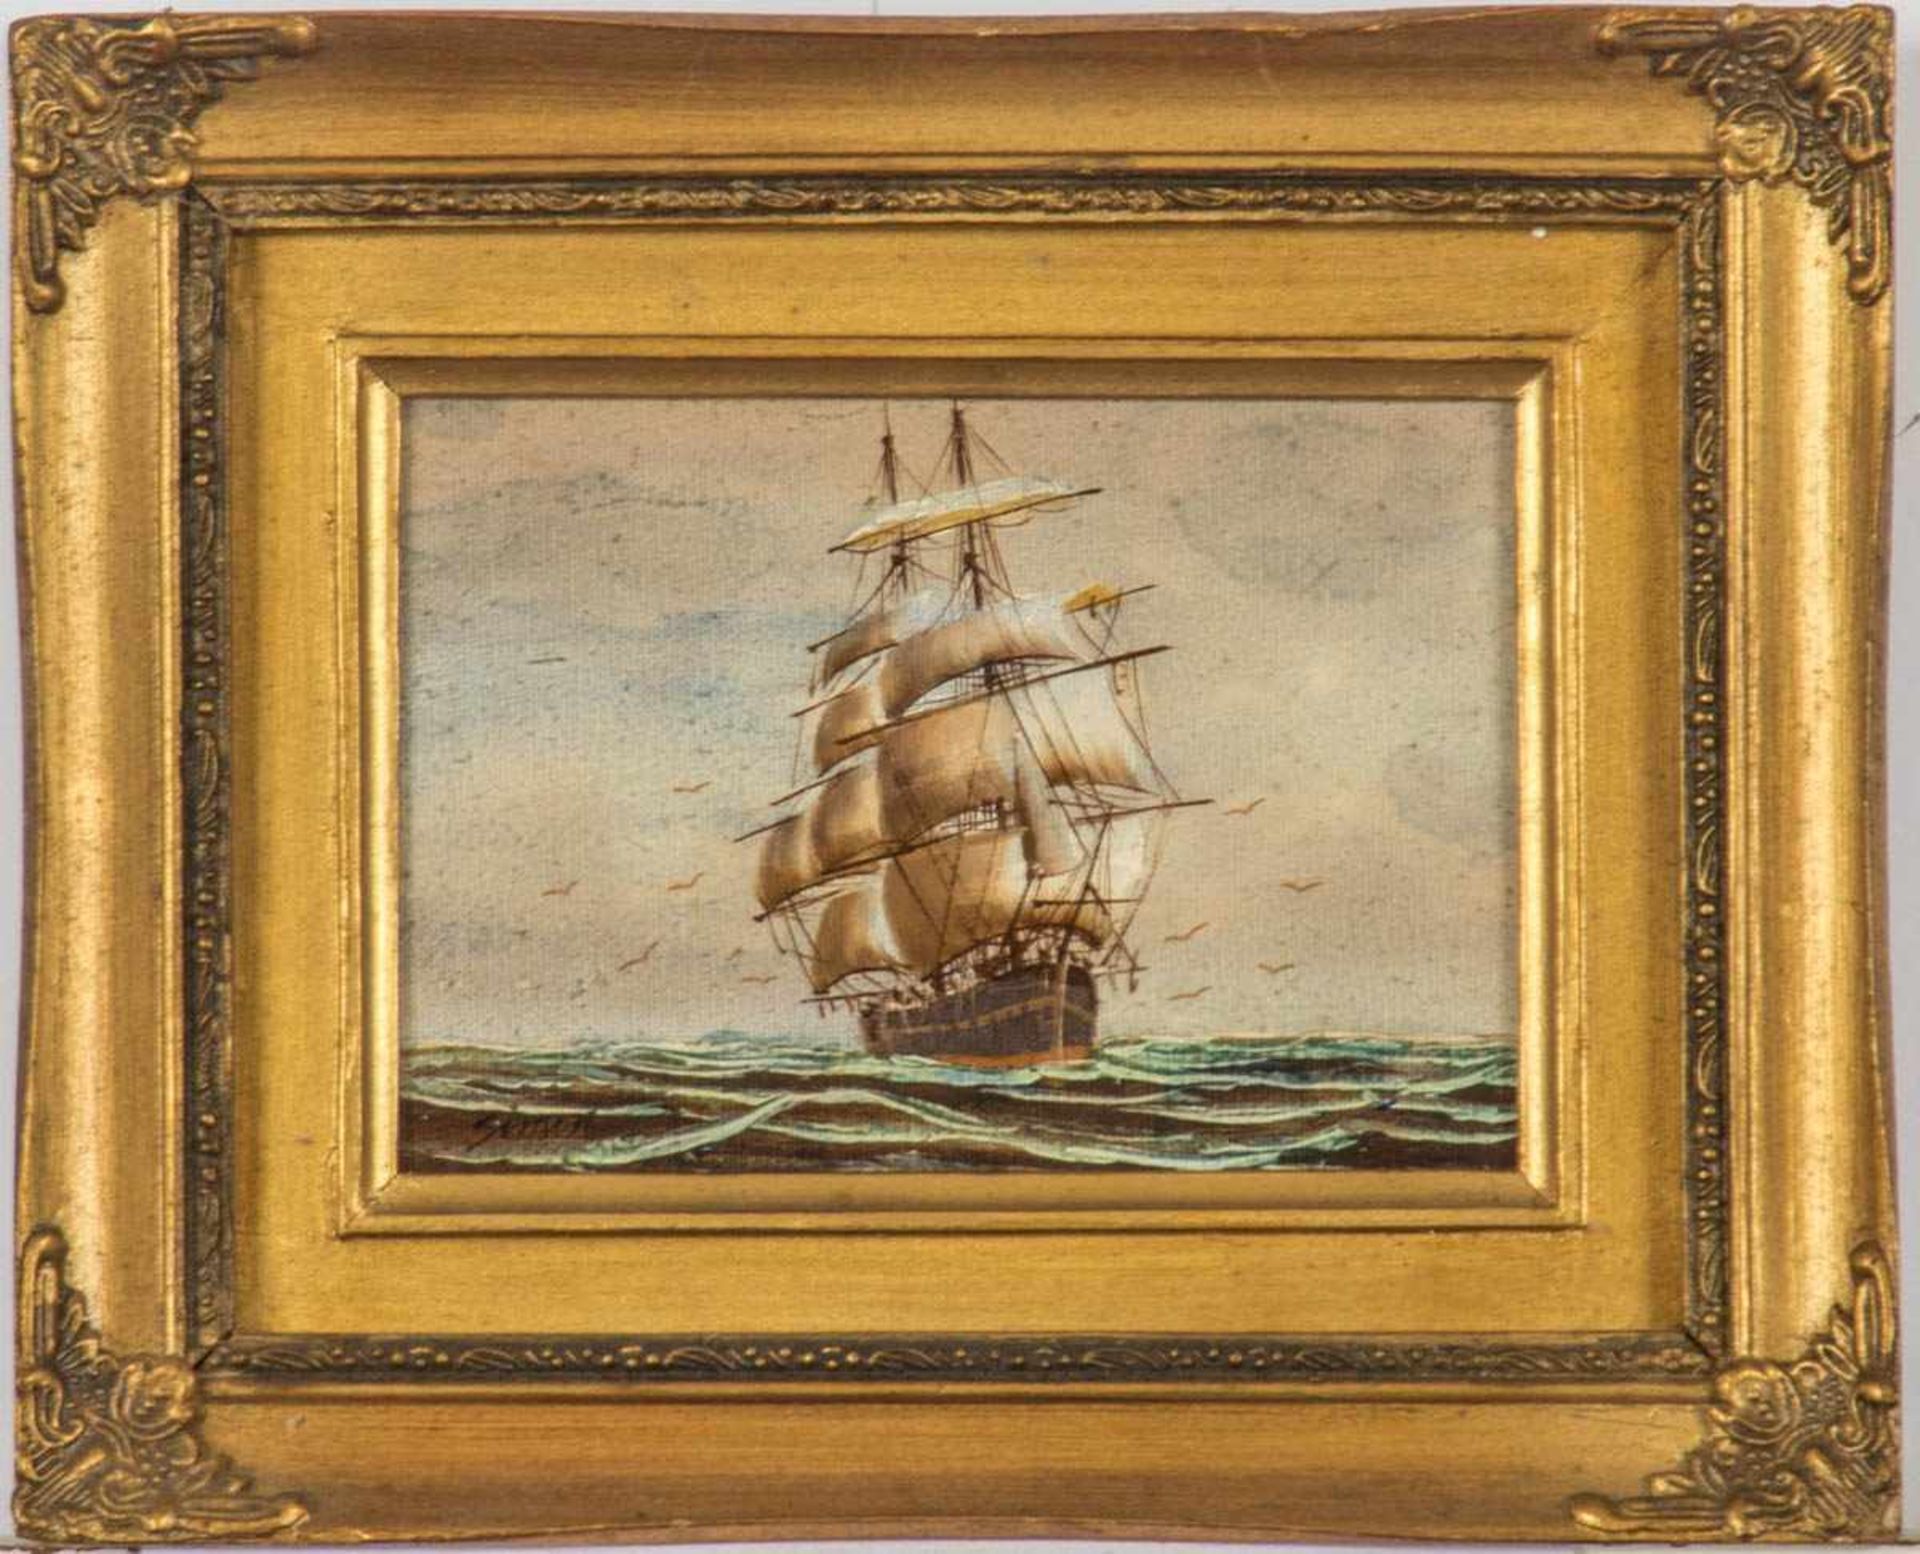 Simon Marinemaler des 20.Jhs. Segler auf hoher See. Öl/Holz. 13 x 17 cm.R.